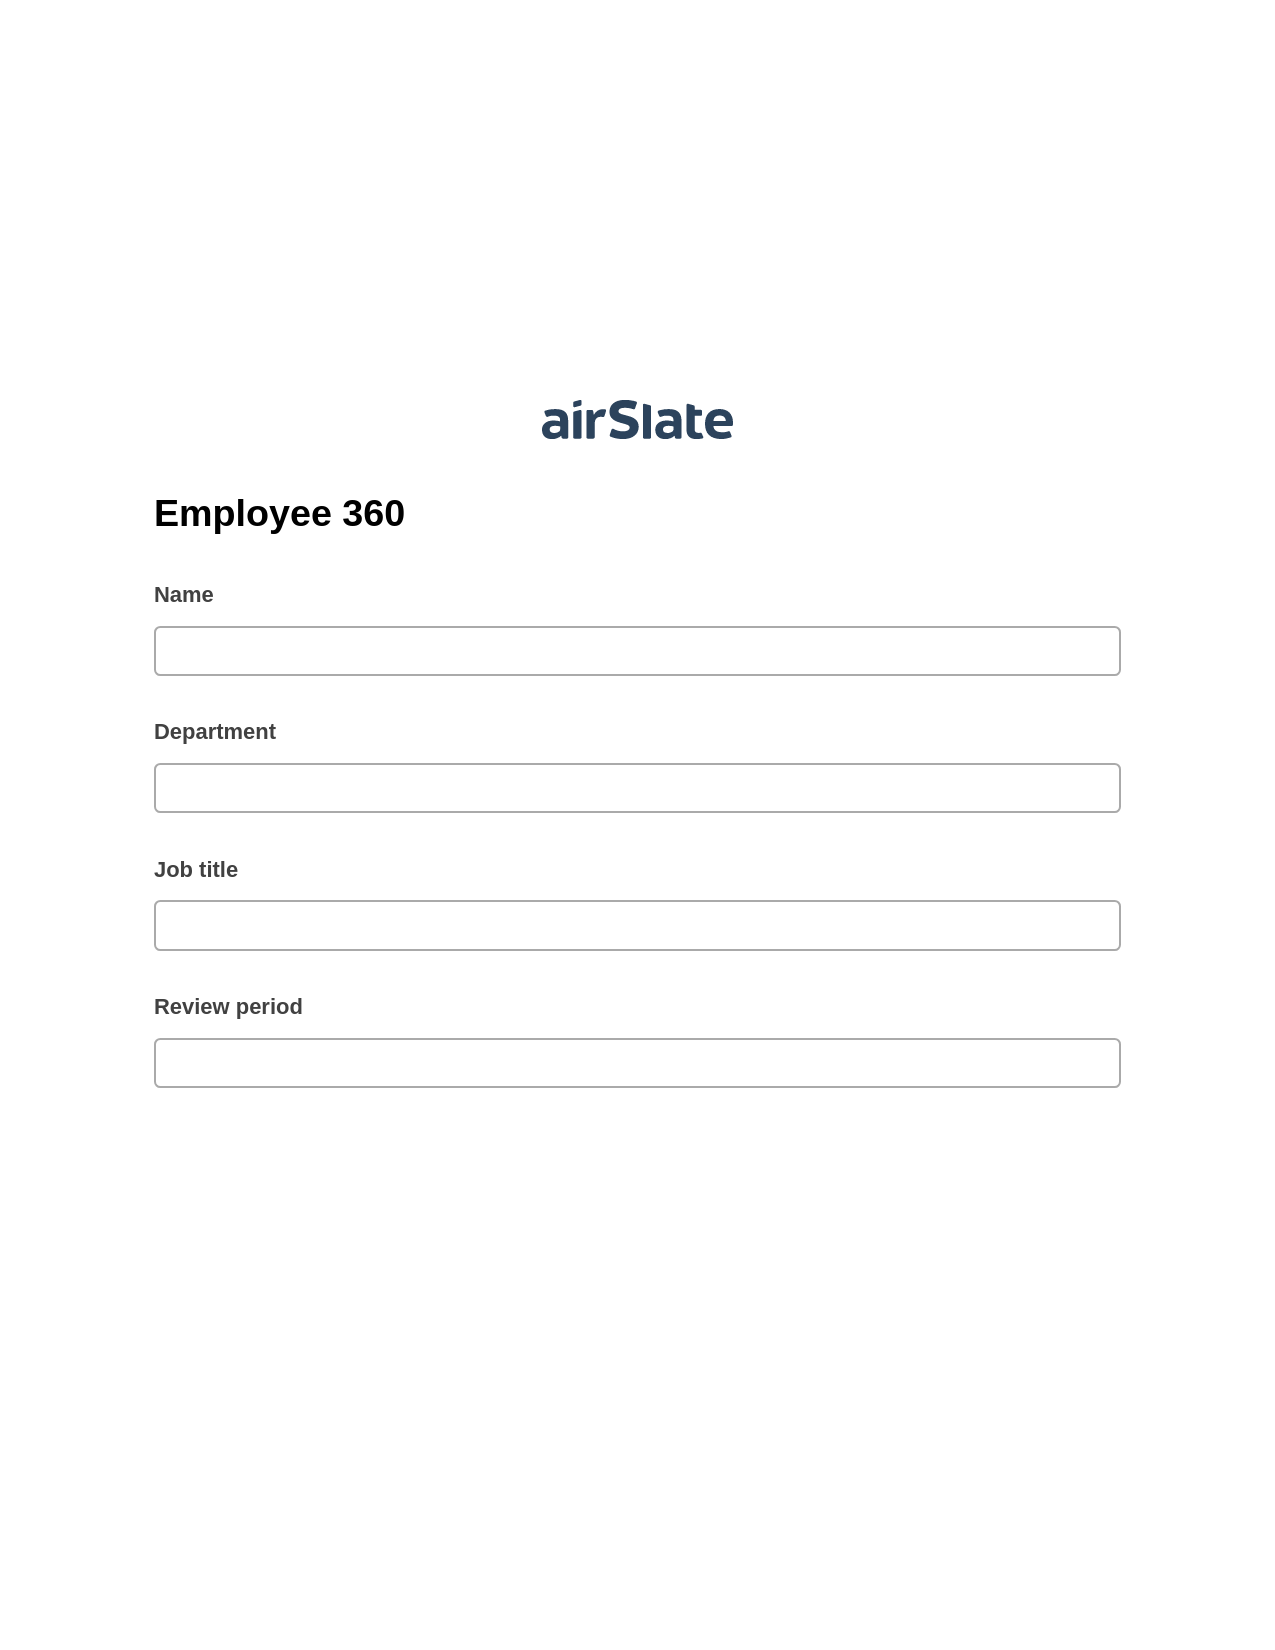 Multirole Employee 360 Pre-fill from CSV File Bot, Invoke Salesforce Process Bot, Archive to Google Drive Bot